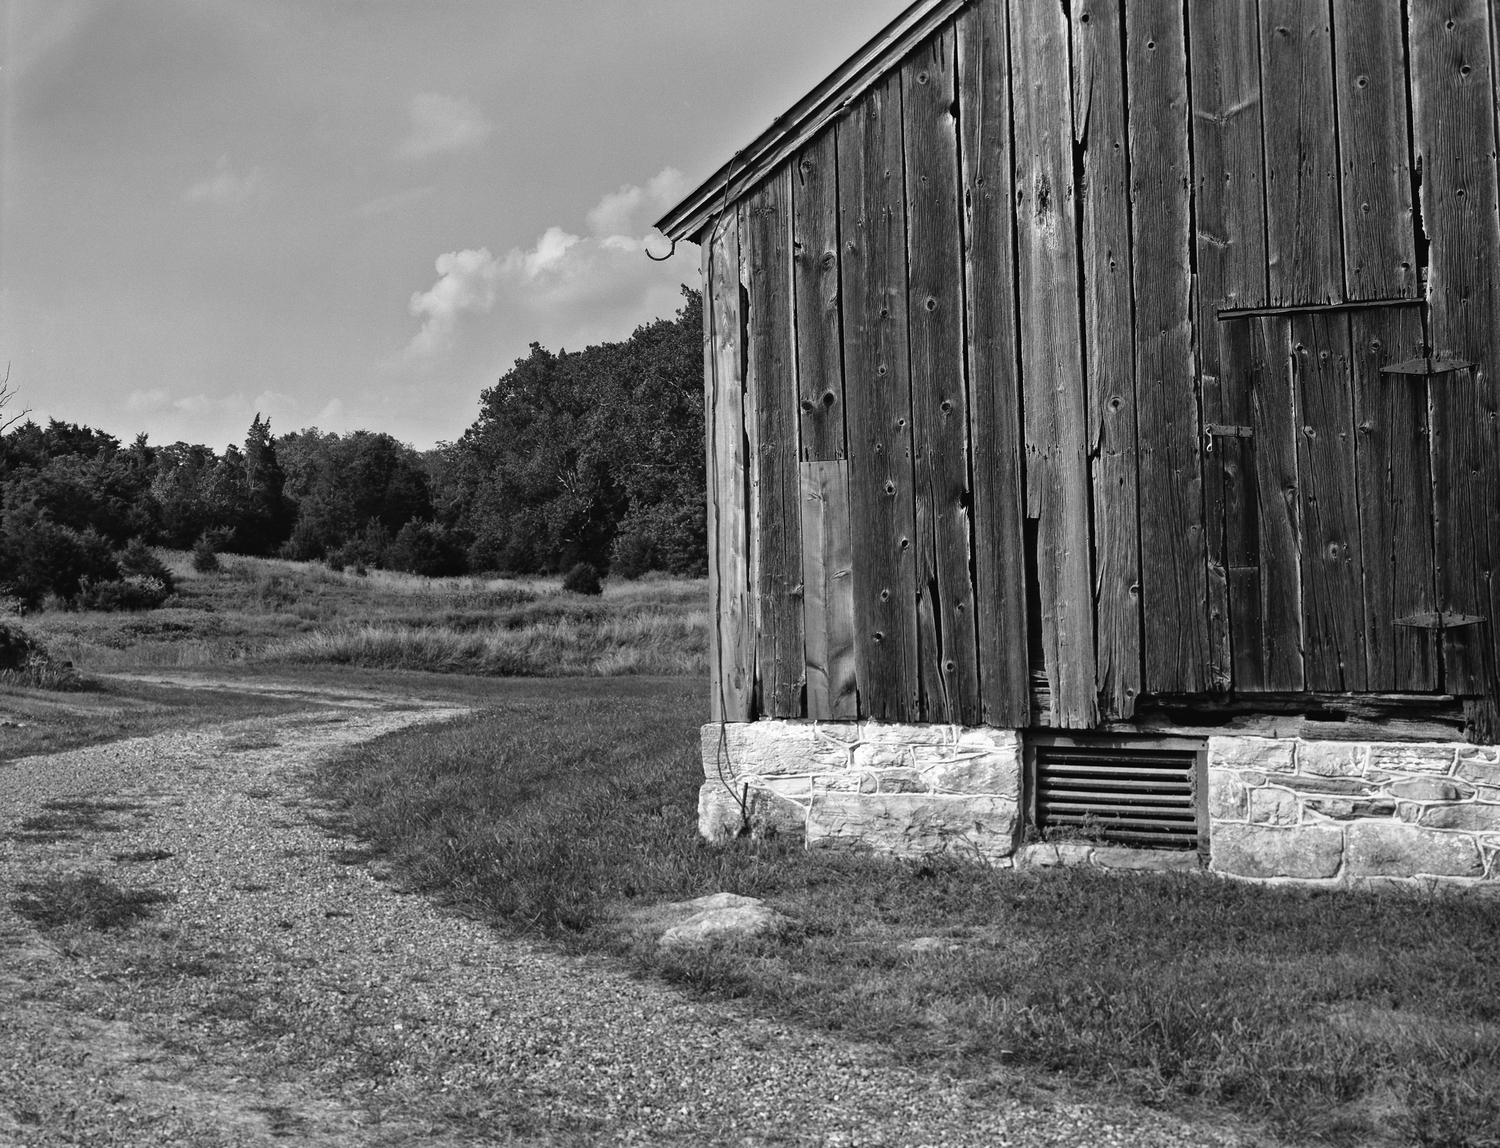  Roulette Farm. &nbsp;Antietam Battlefield. &nbsp;Sharpsburg, Maryland.&nbsp; 